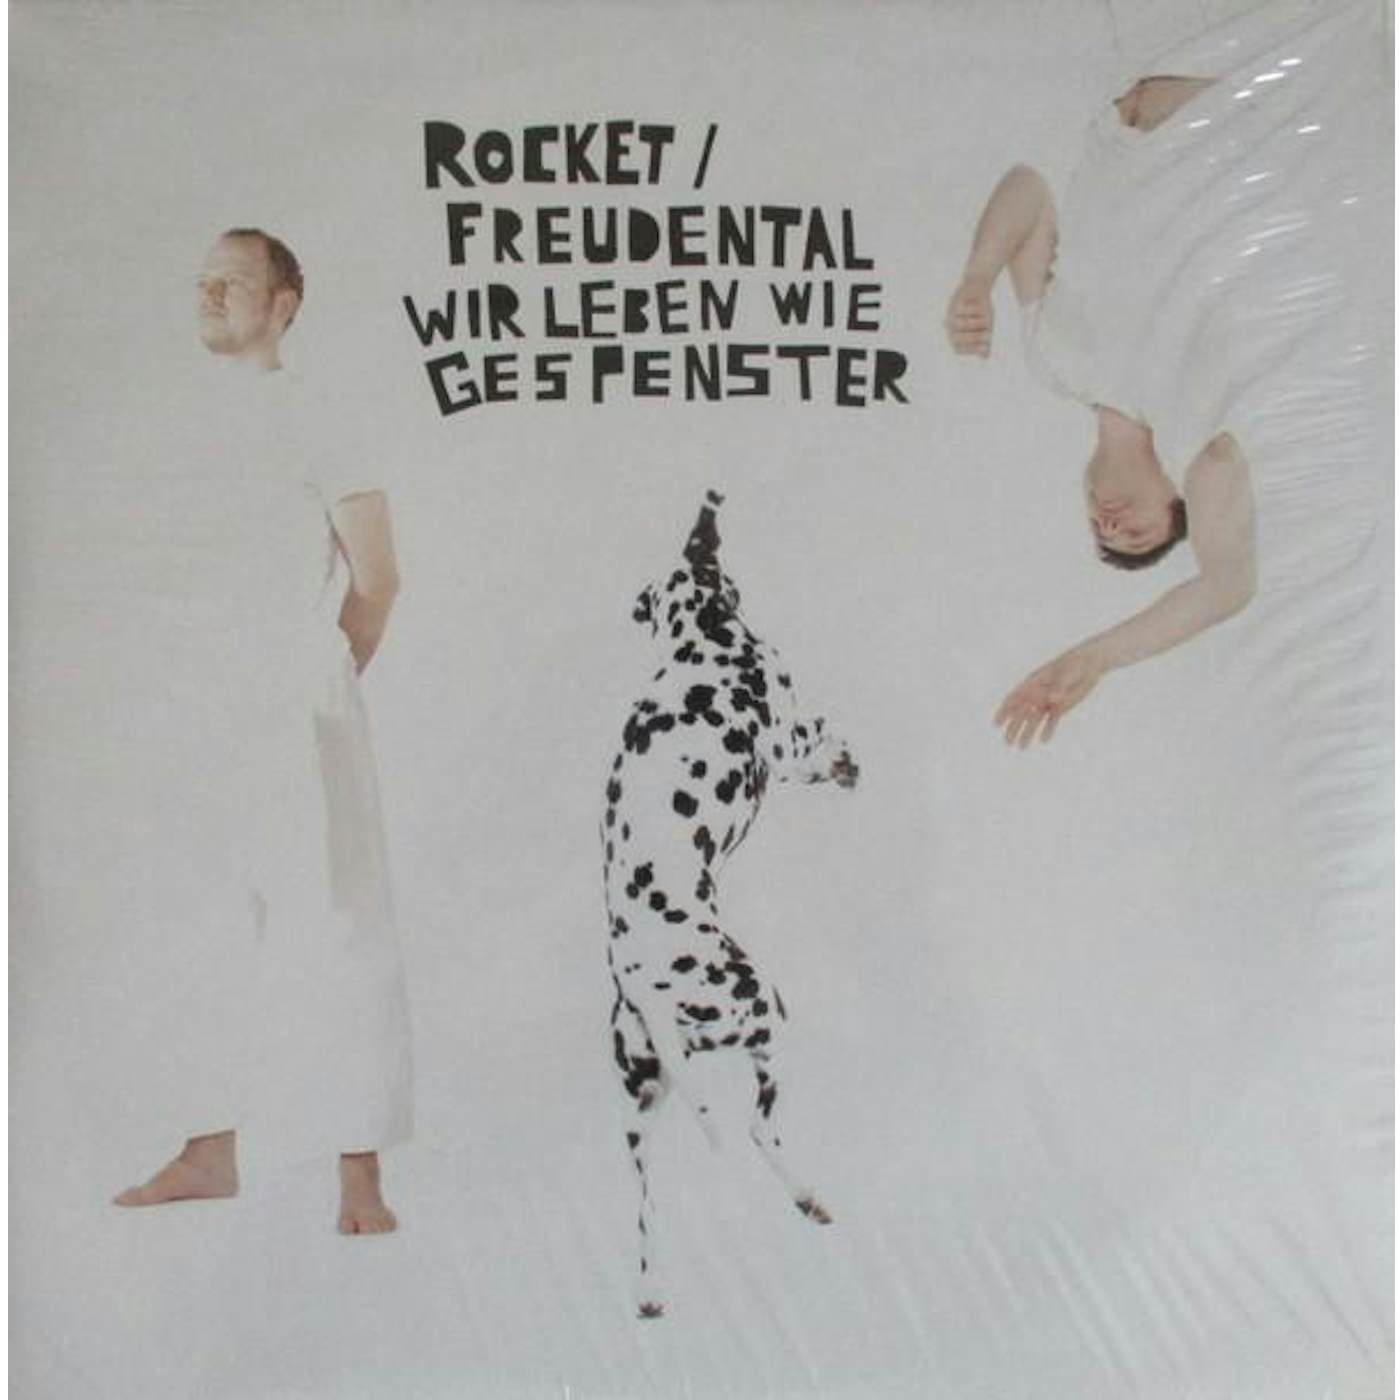 Rocket Freudental Wir Leben Wie Gespenster Vinyl Record